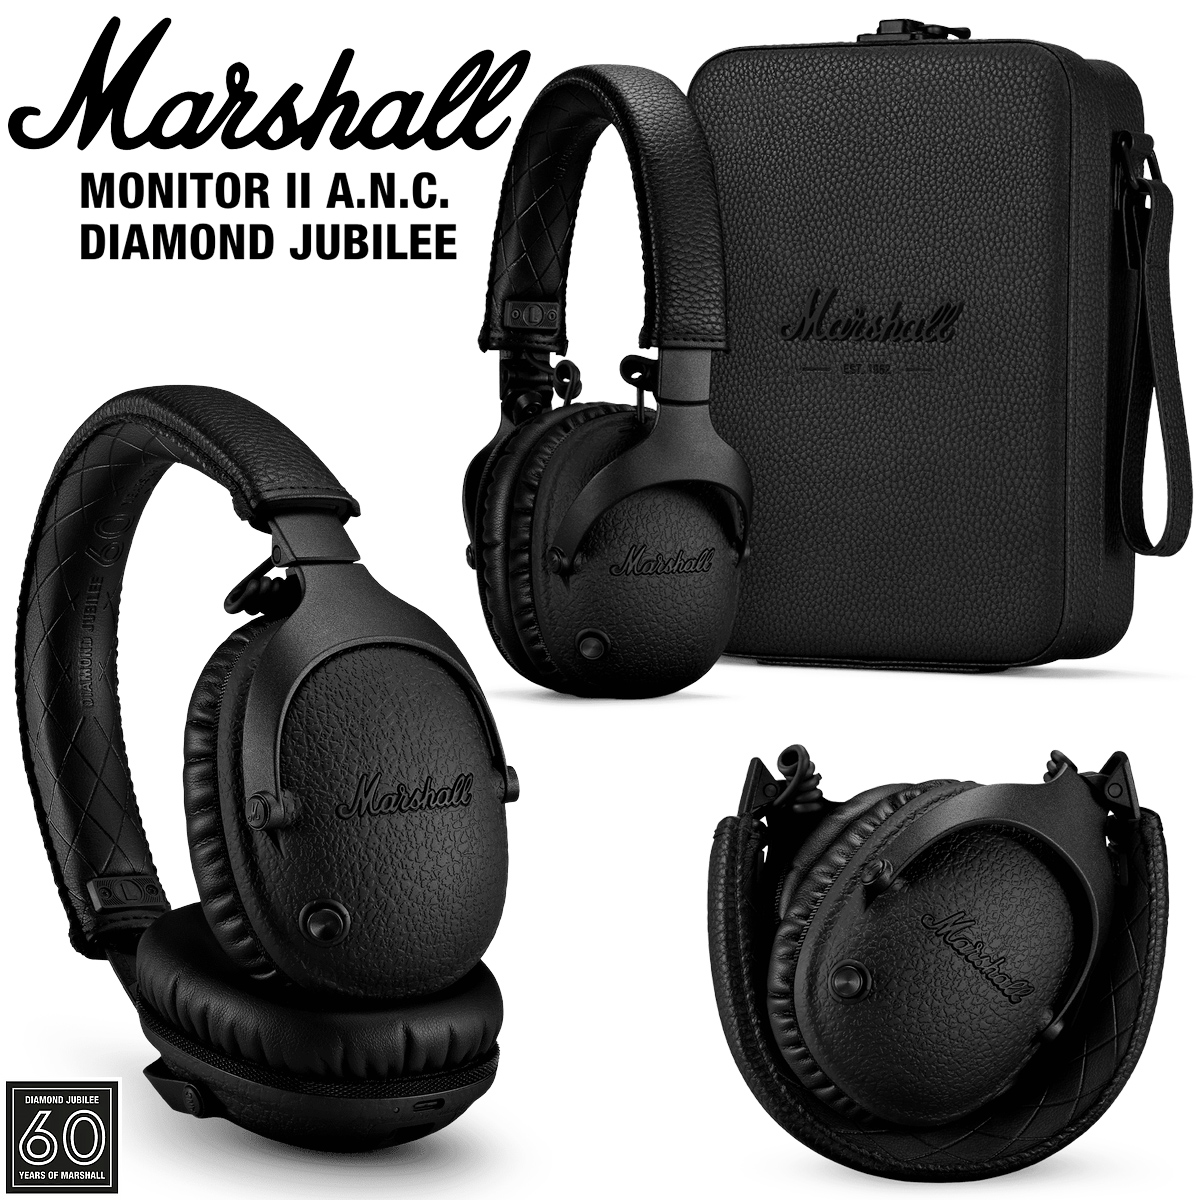 Fones Marshall Monitor II A.N.C Diamond Jubilee Over-Ear Headphones